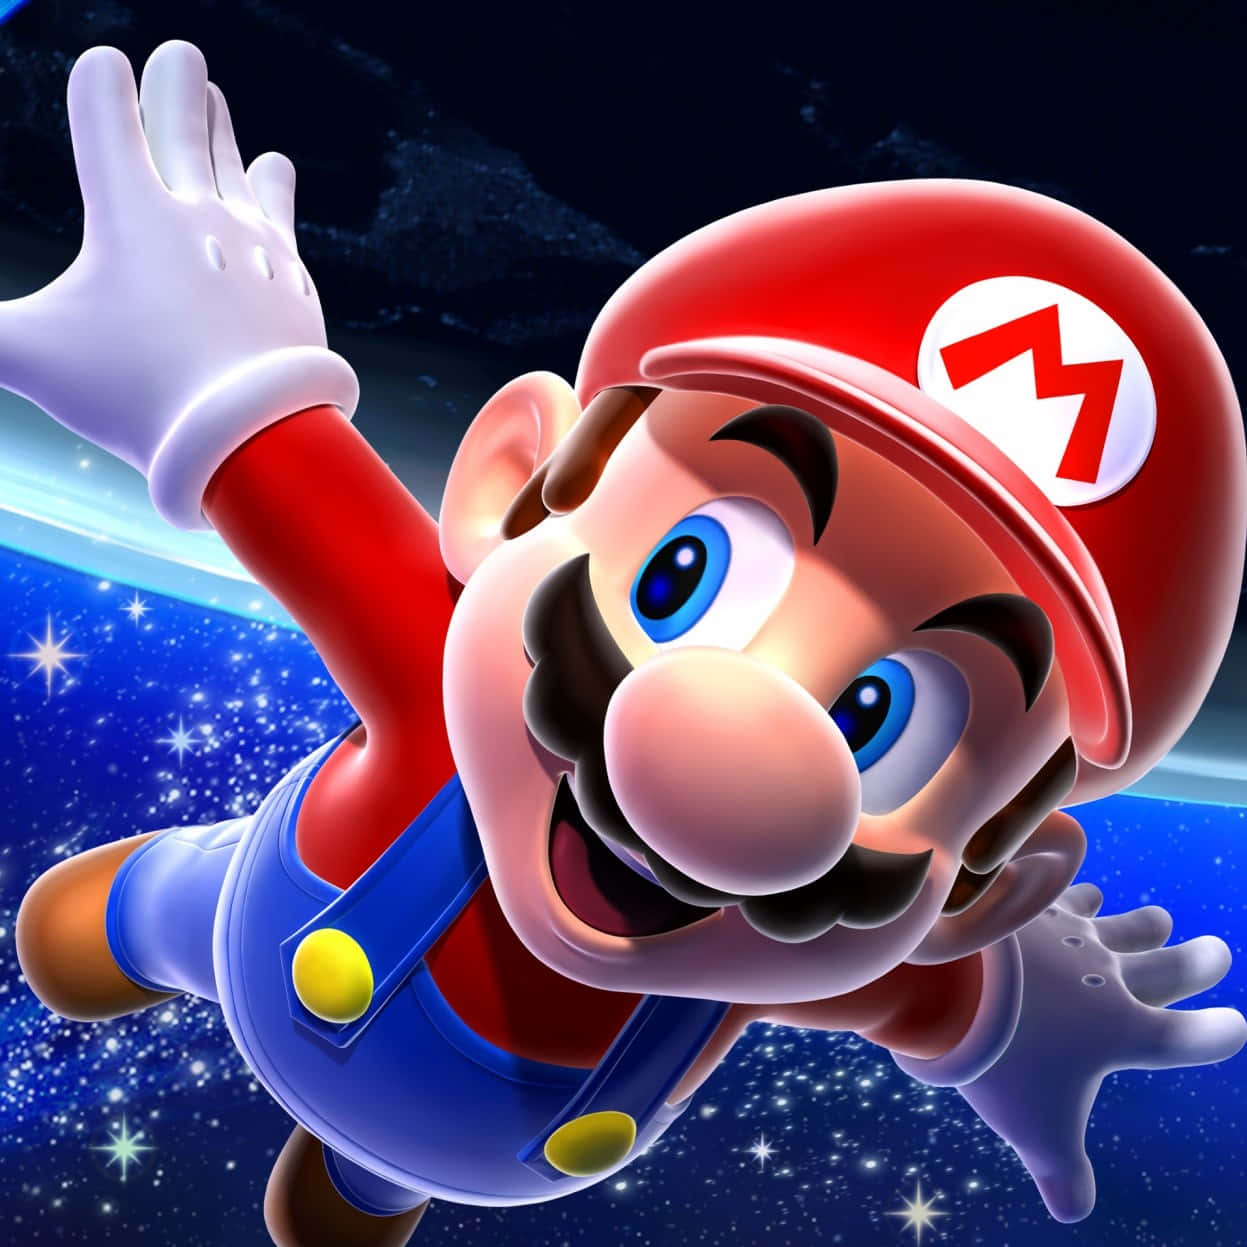 Explore New Worlds with Mario in Super Mario Galaxy Wallpaper